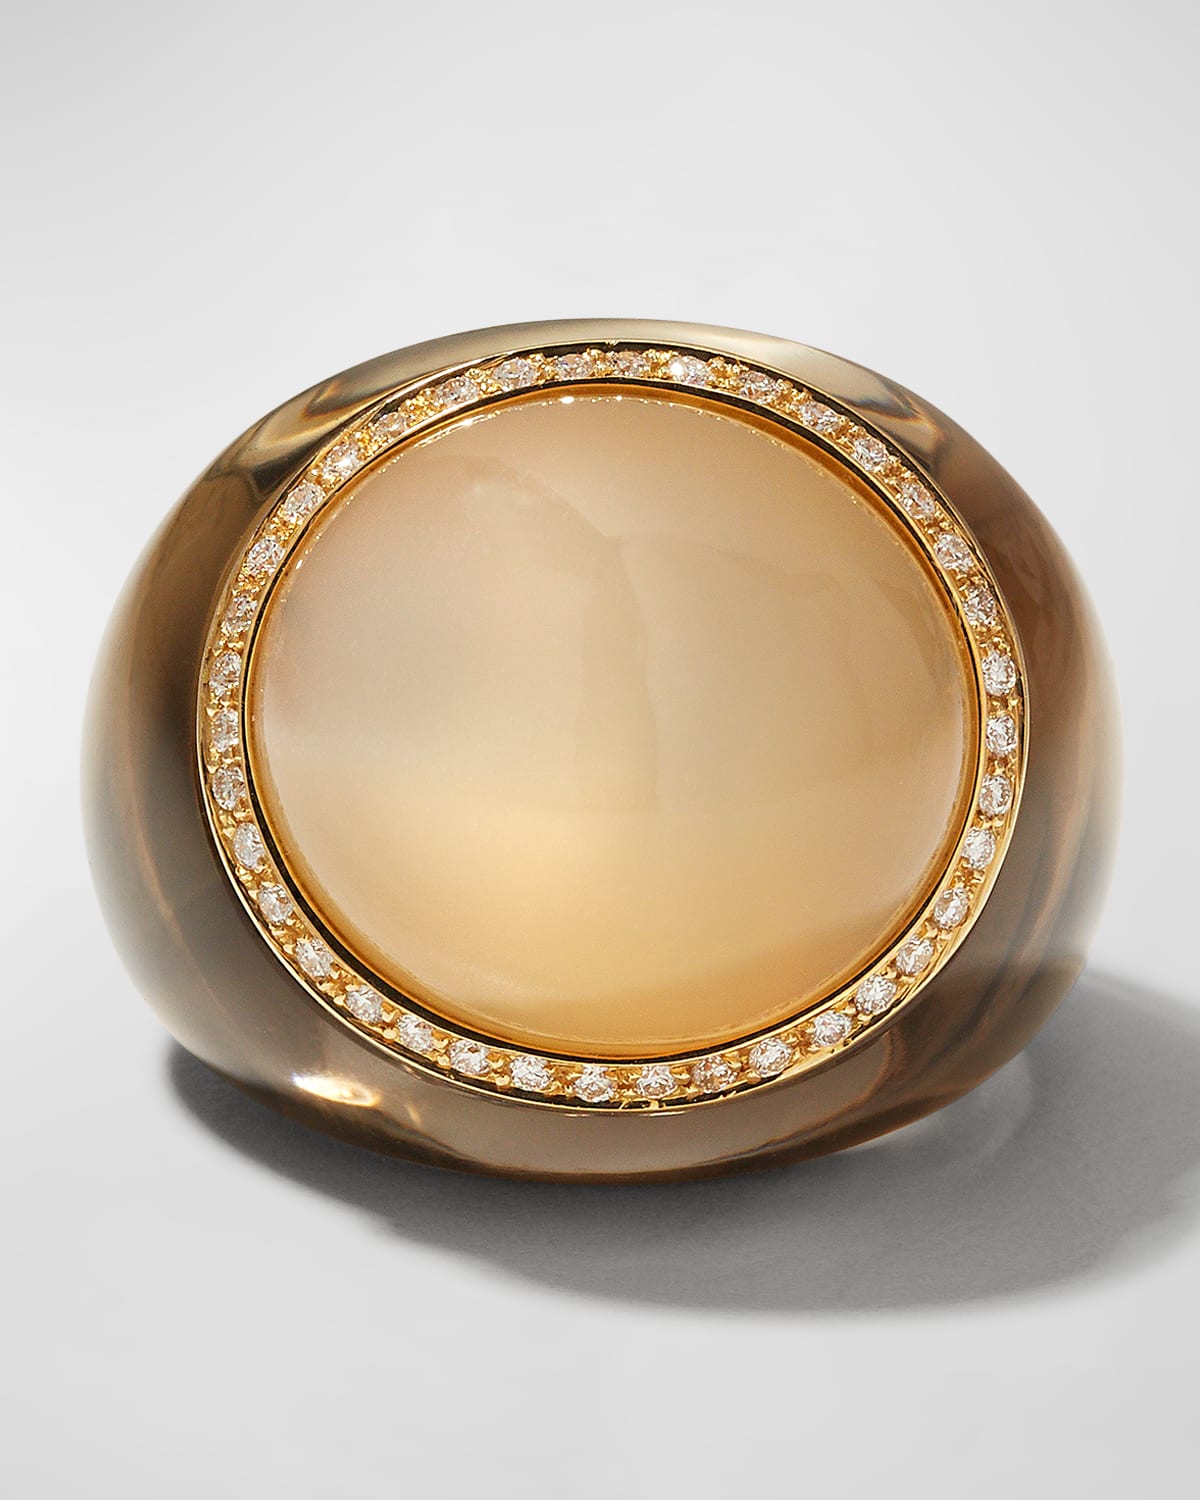 Sanalitro 18k Yellow And White Gold Ring With Smokey Quartz, Moonstone And Diamonds